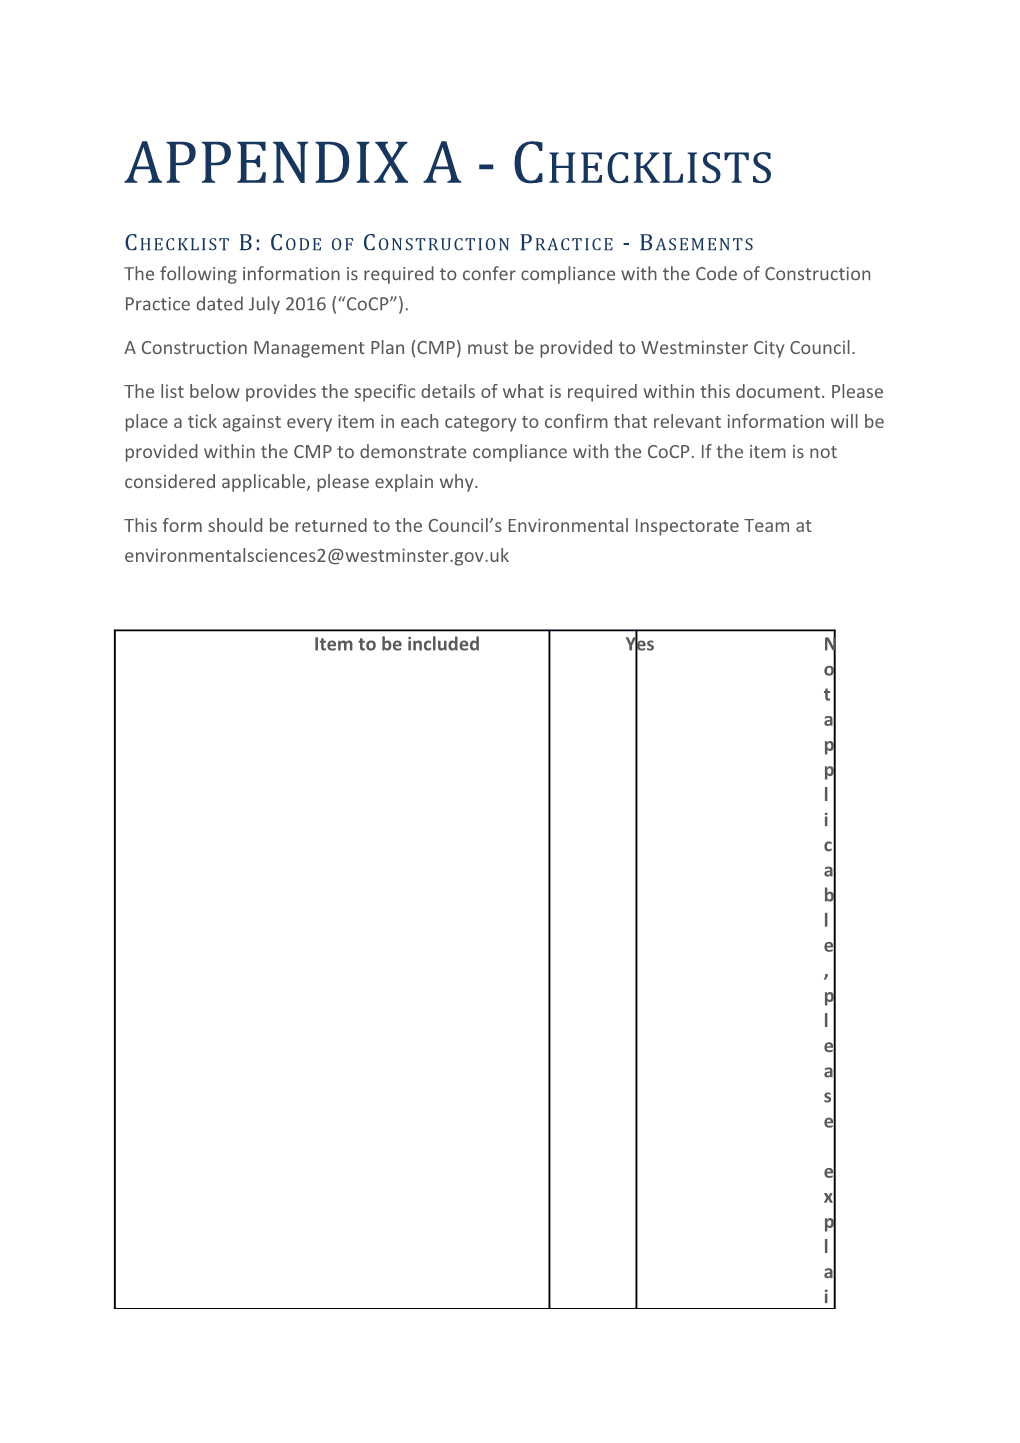 Checklist B: Code of Construction Practice - Basements